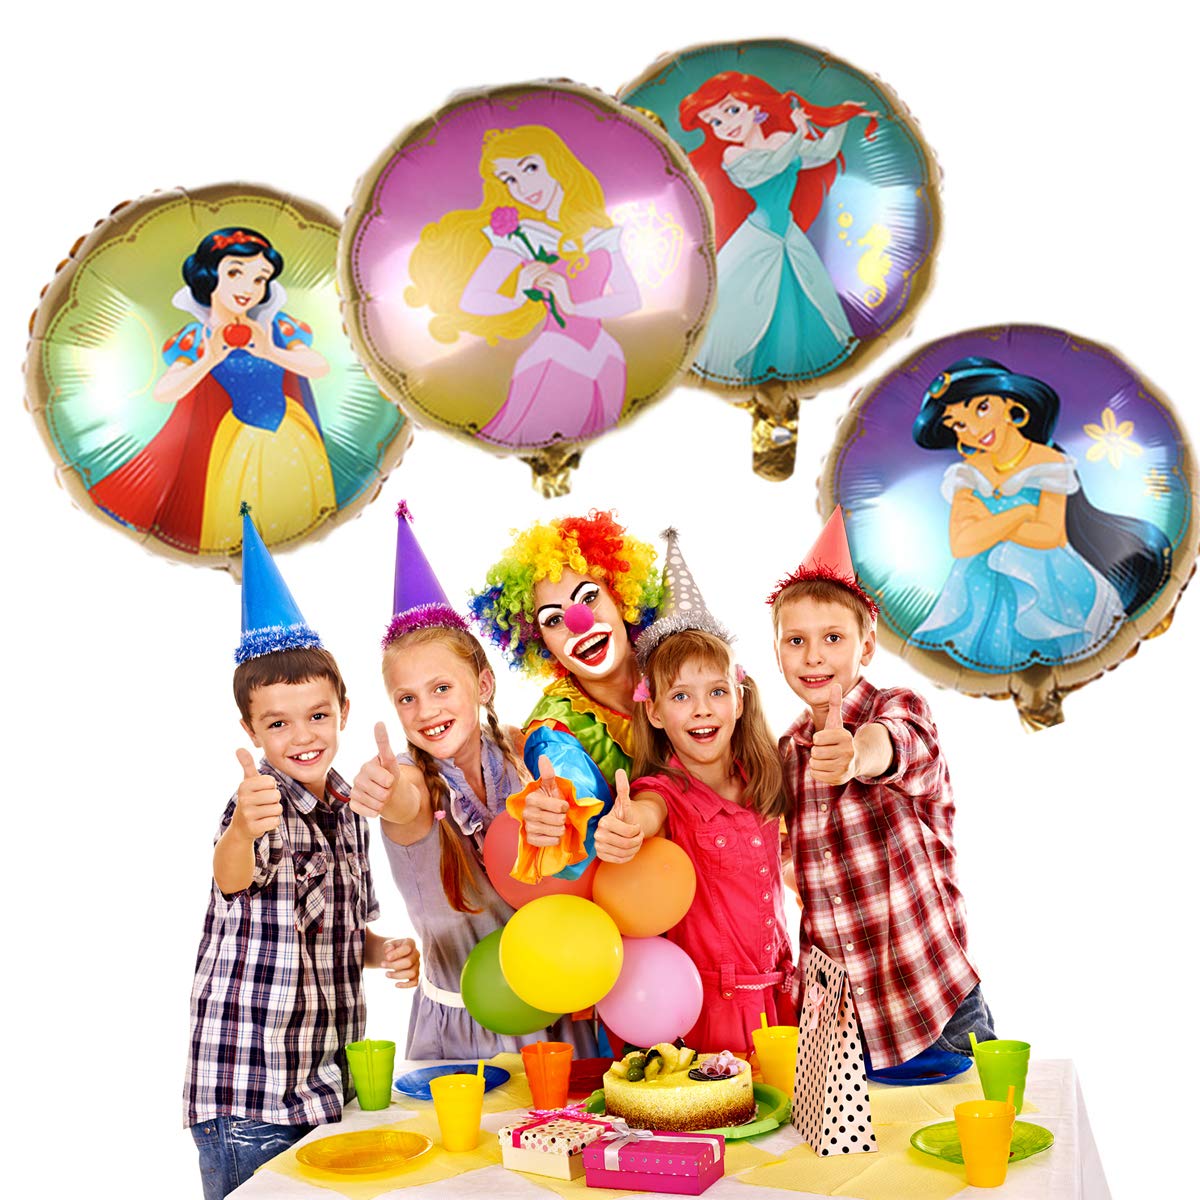 8pcs Disney Princess Balloon Bouquet, Disney Princess Party Supplies, Girls Birthday Party Decorations